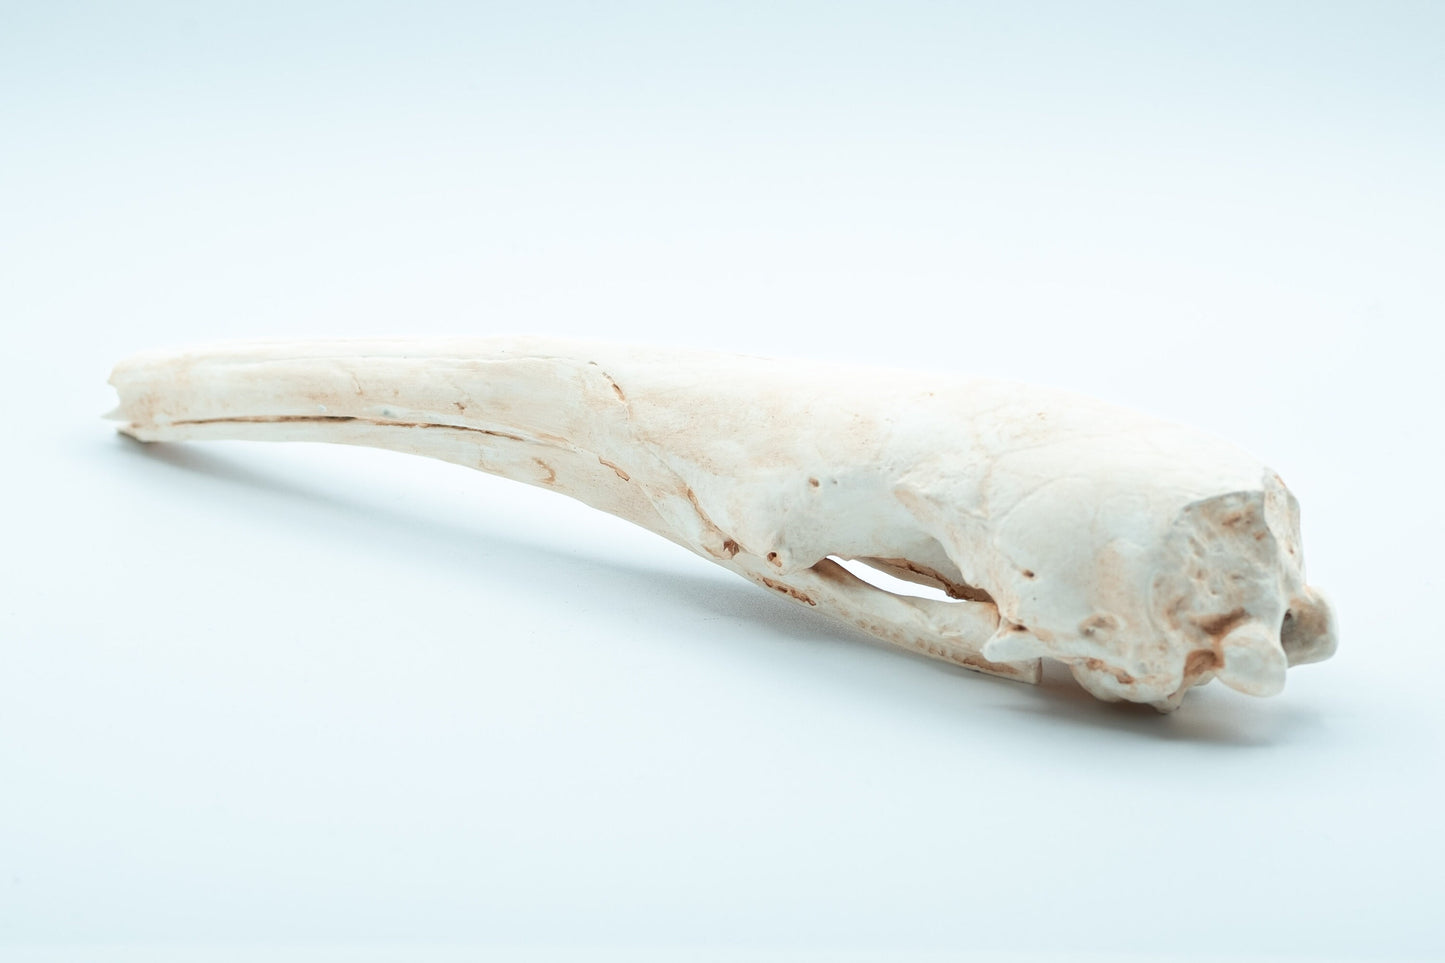 Giant Anteater Skull Replica - Safety Third Studios